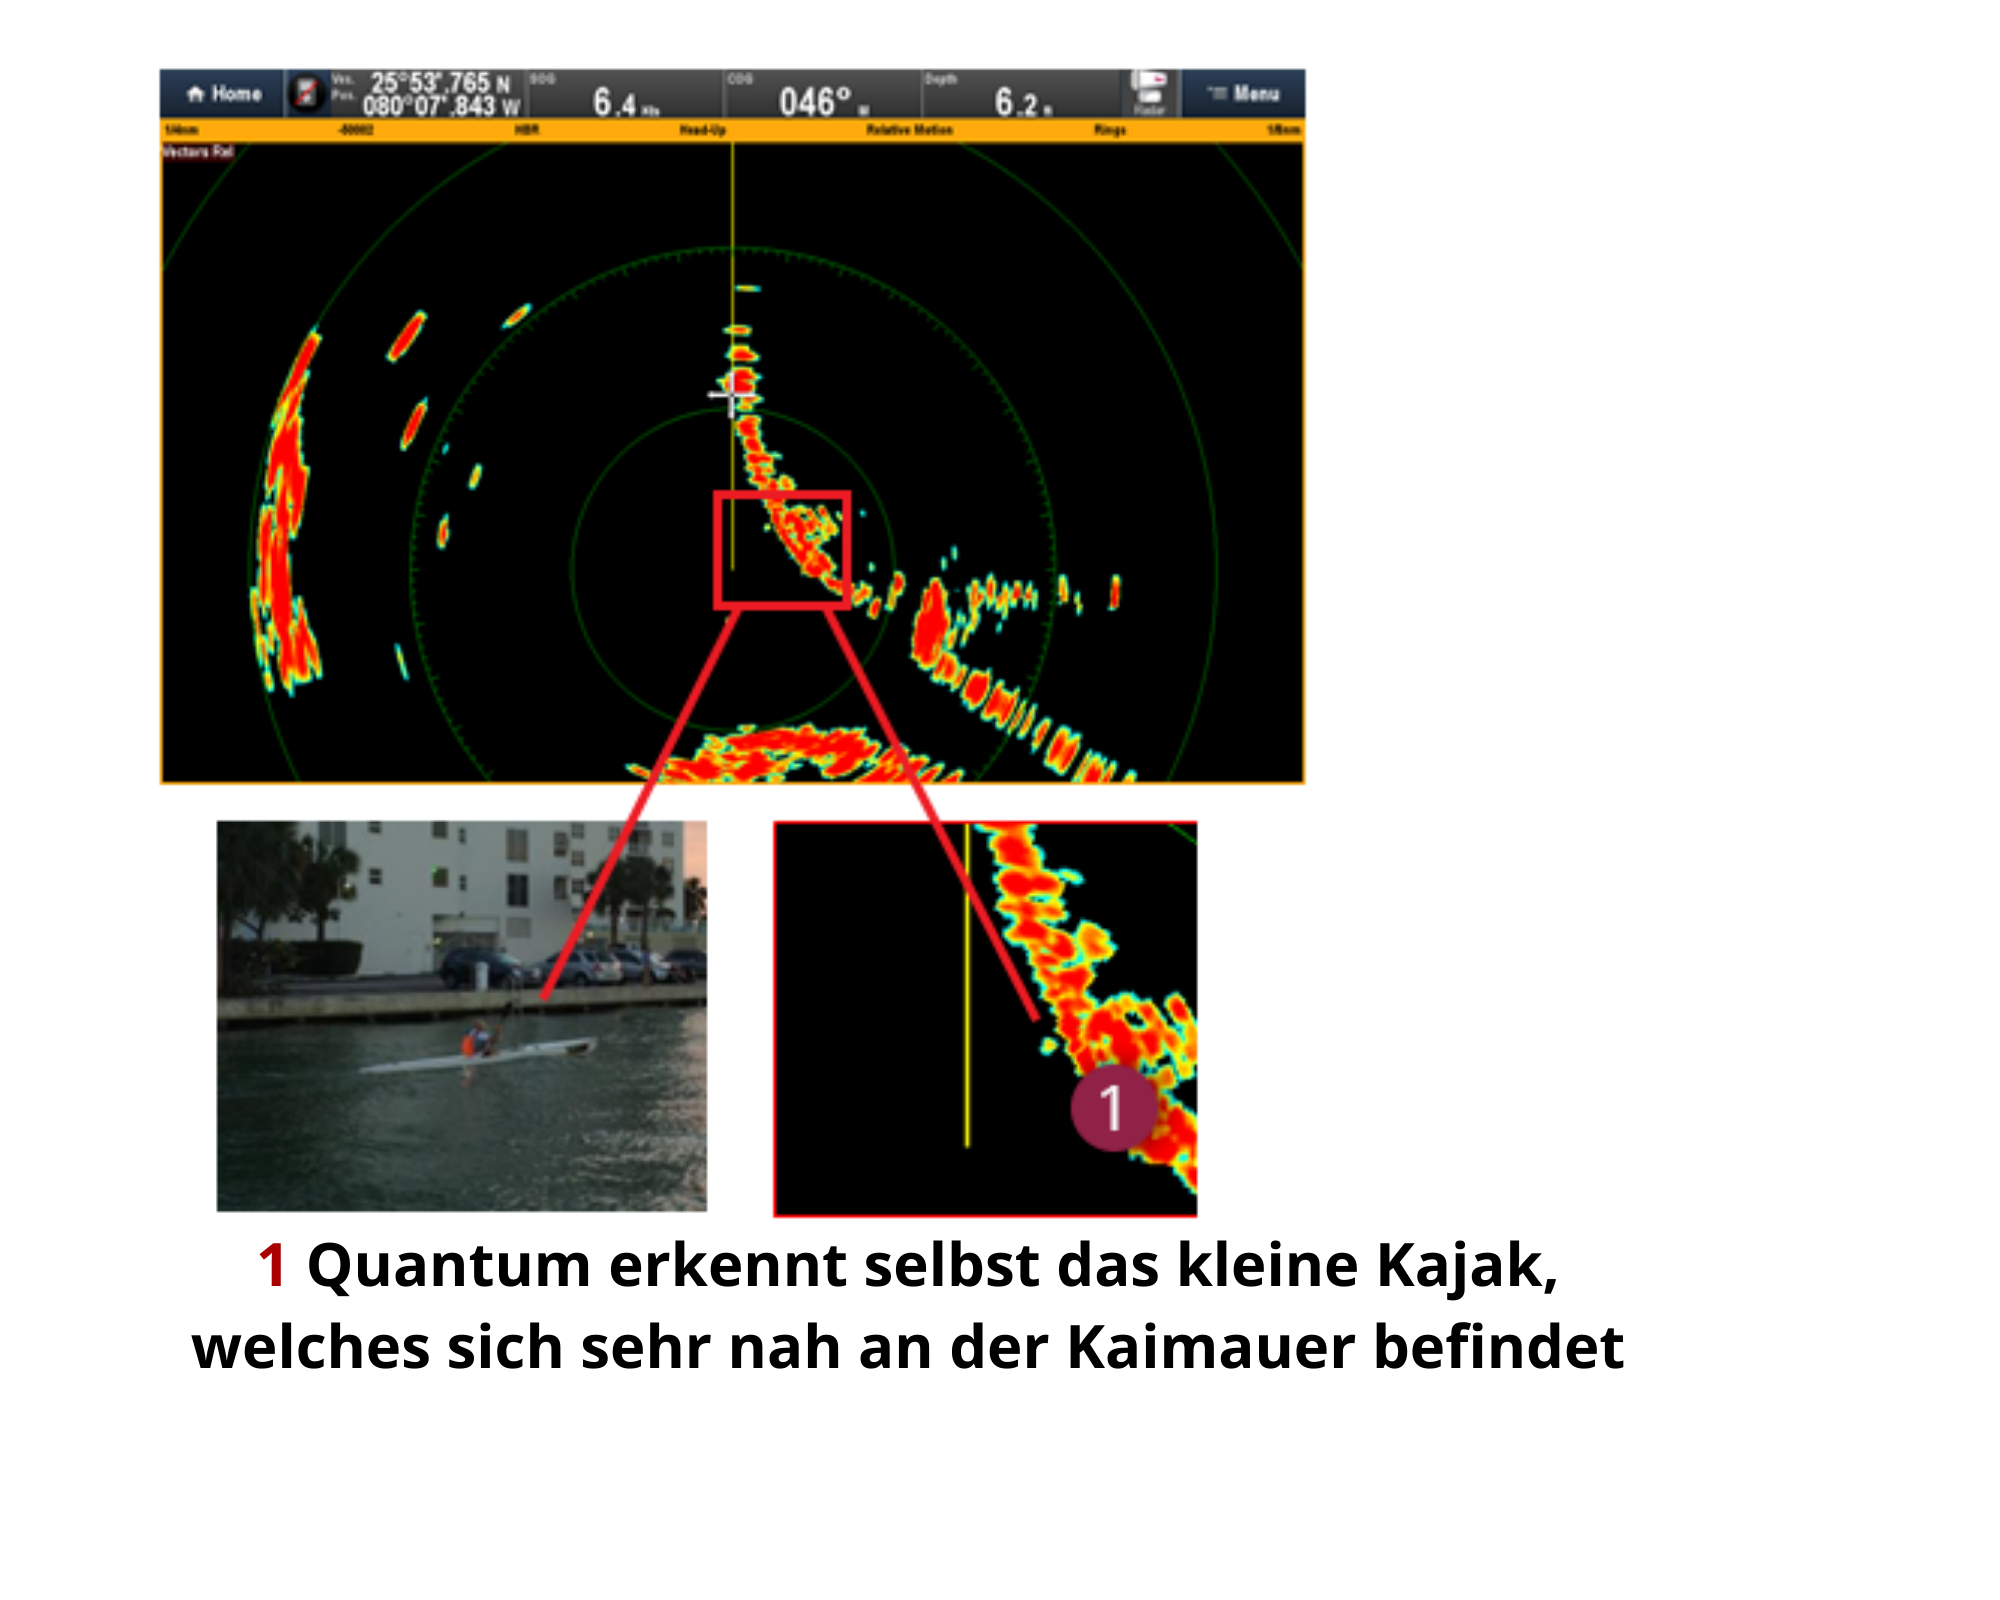 Raymarine Quantum Q24W 18" Antenne radôme (WiFi)